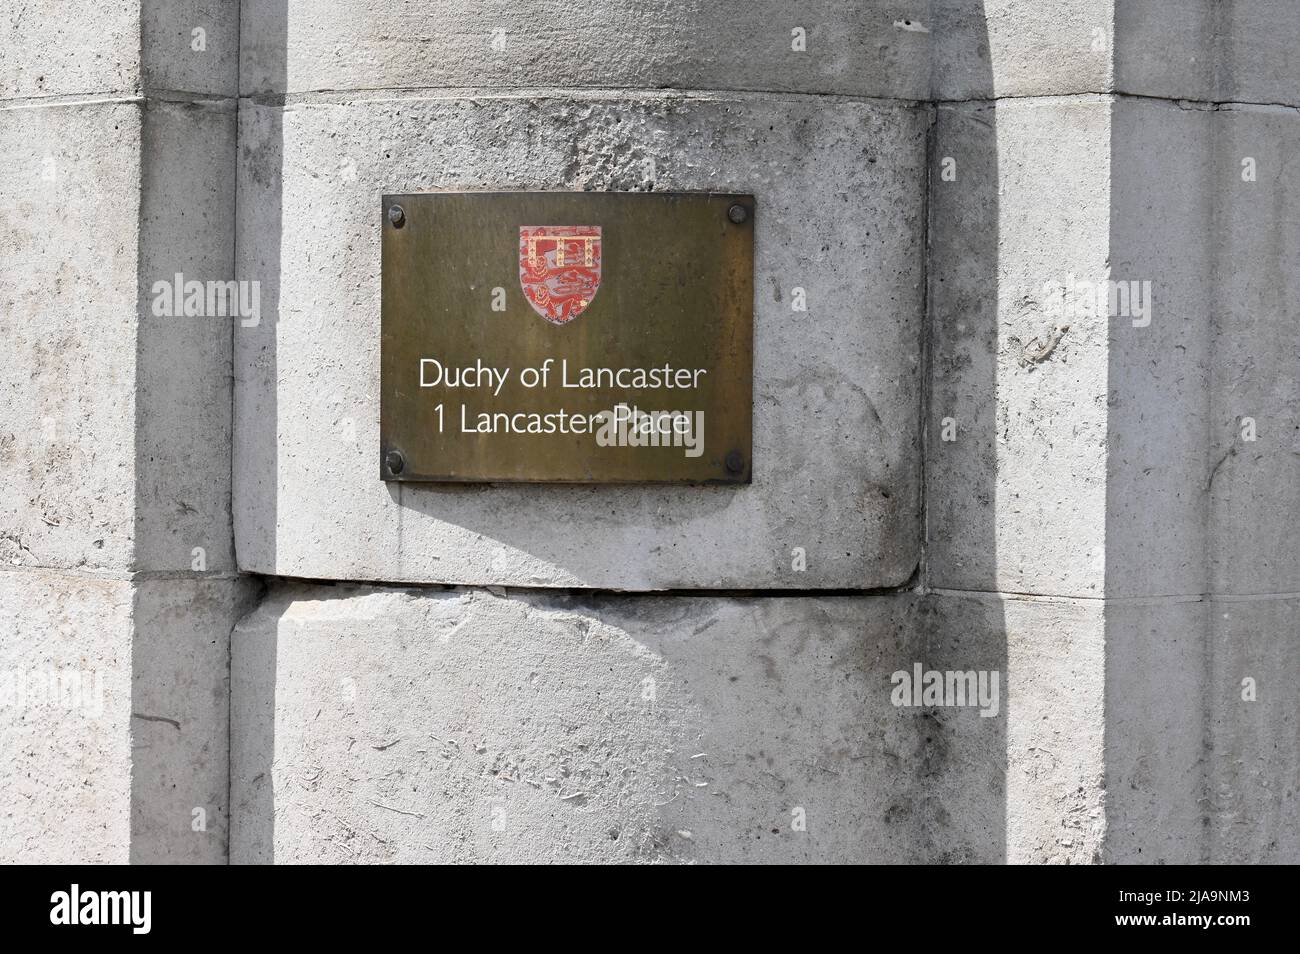 Duchy of Lancaster sign, 1 Lancaster Place, London, UK Stock Photo